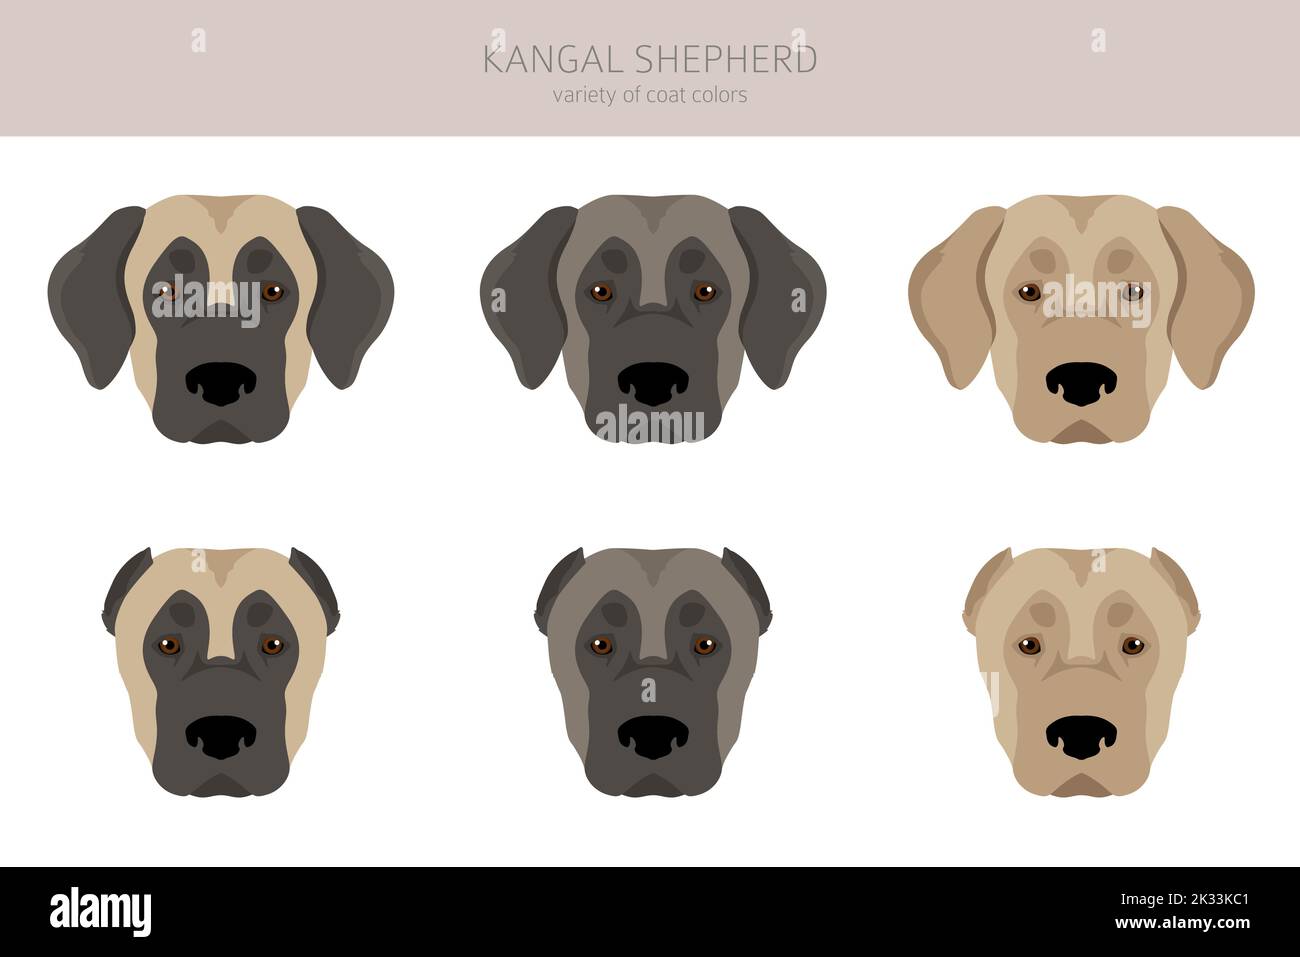 Kangal Shepherd dog clipart. Different coat colors set.  Vector illustration Stock Vector